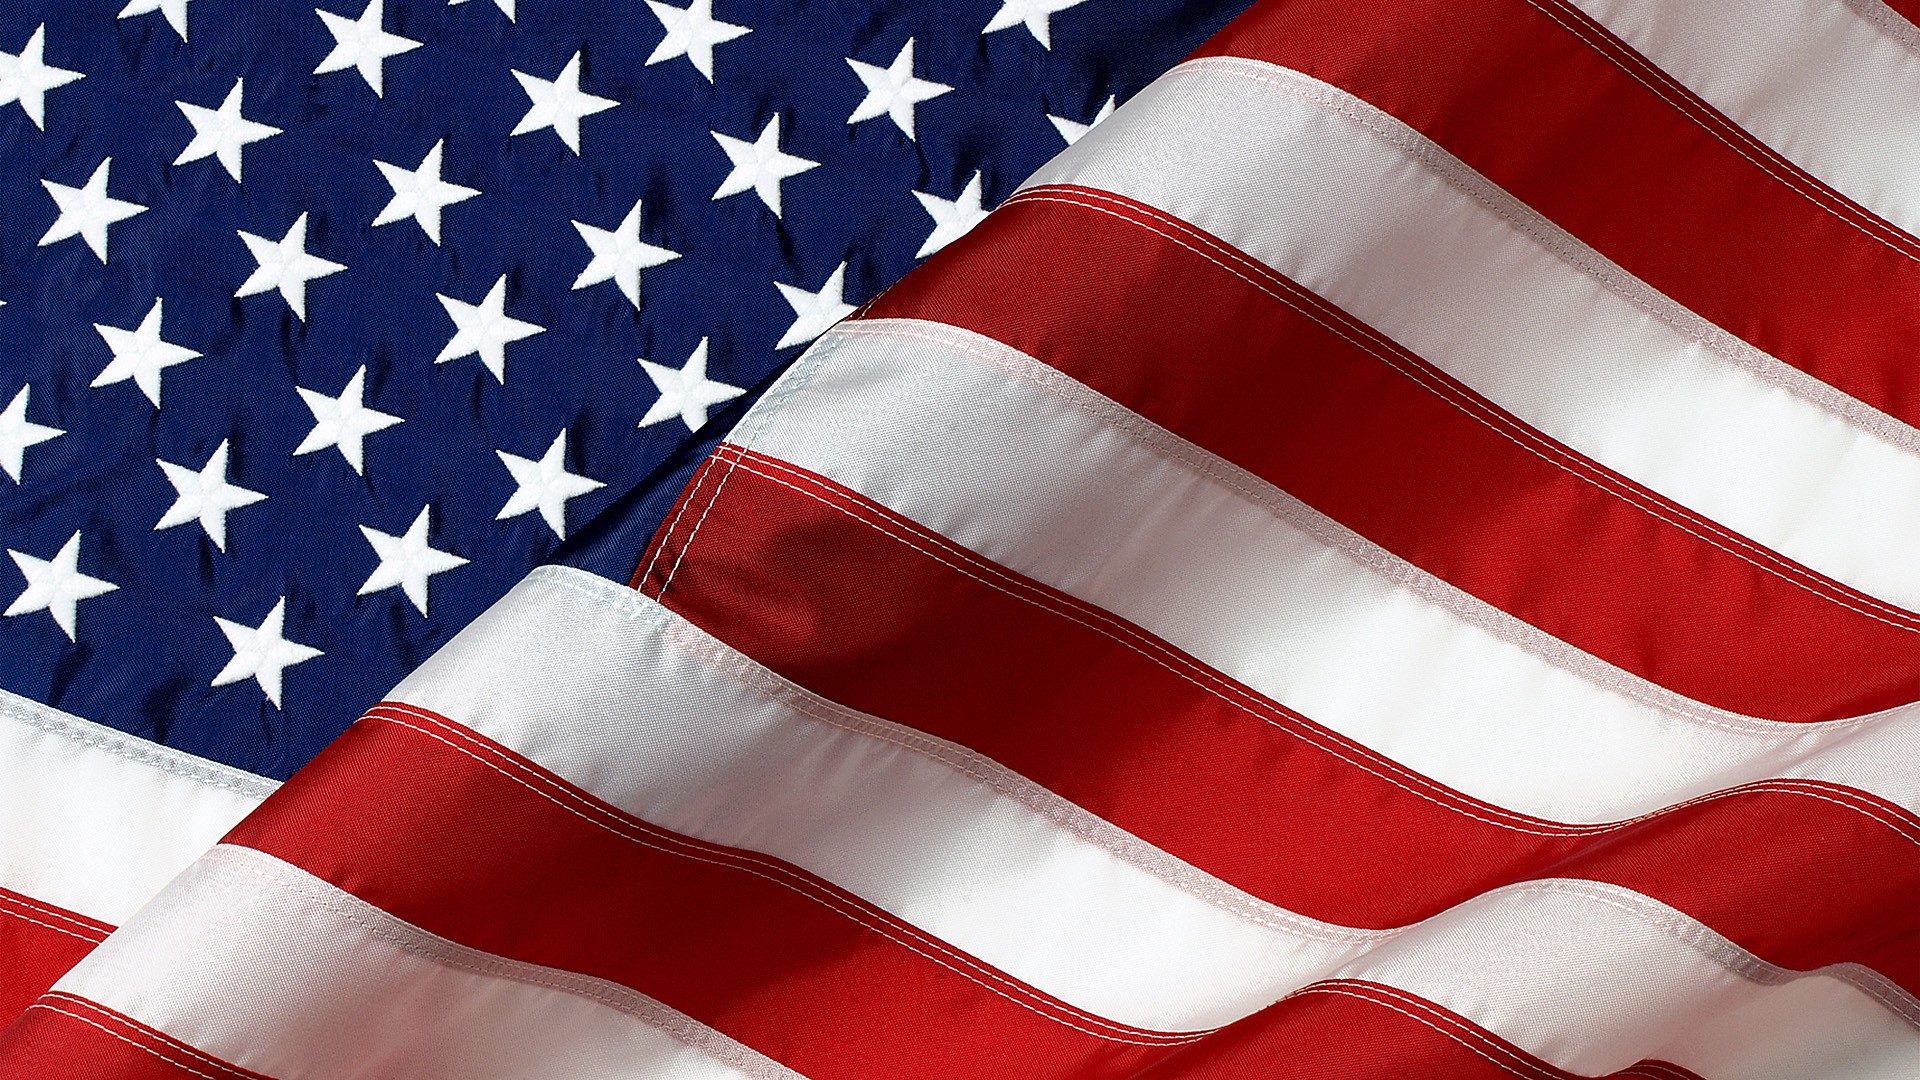 American Flag Art